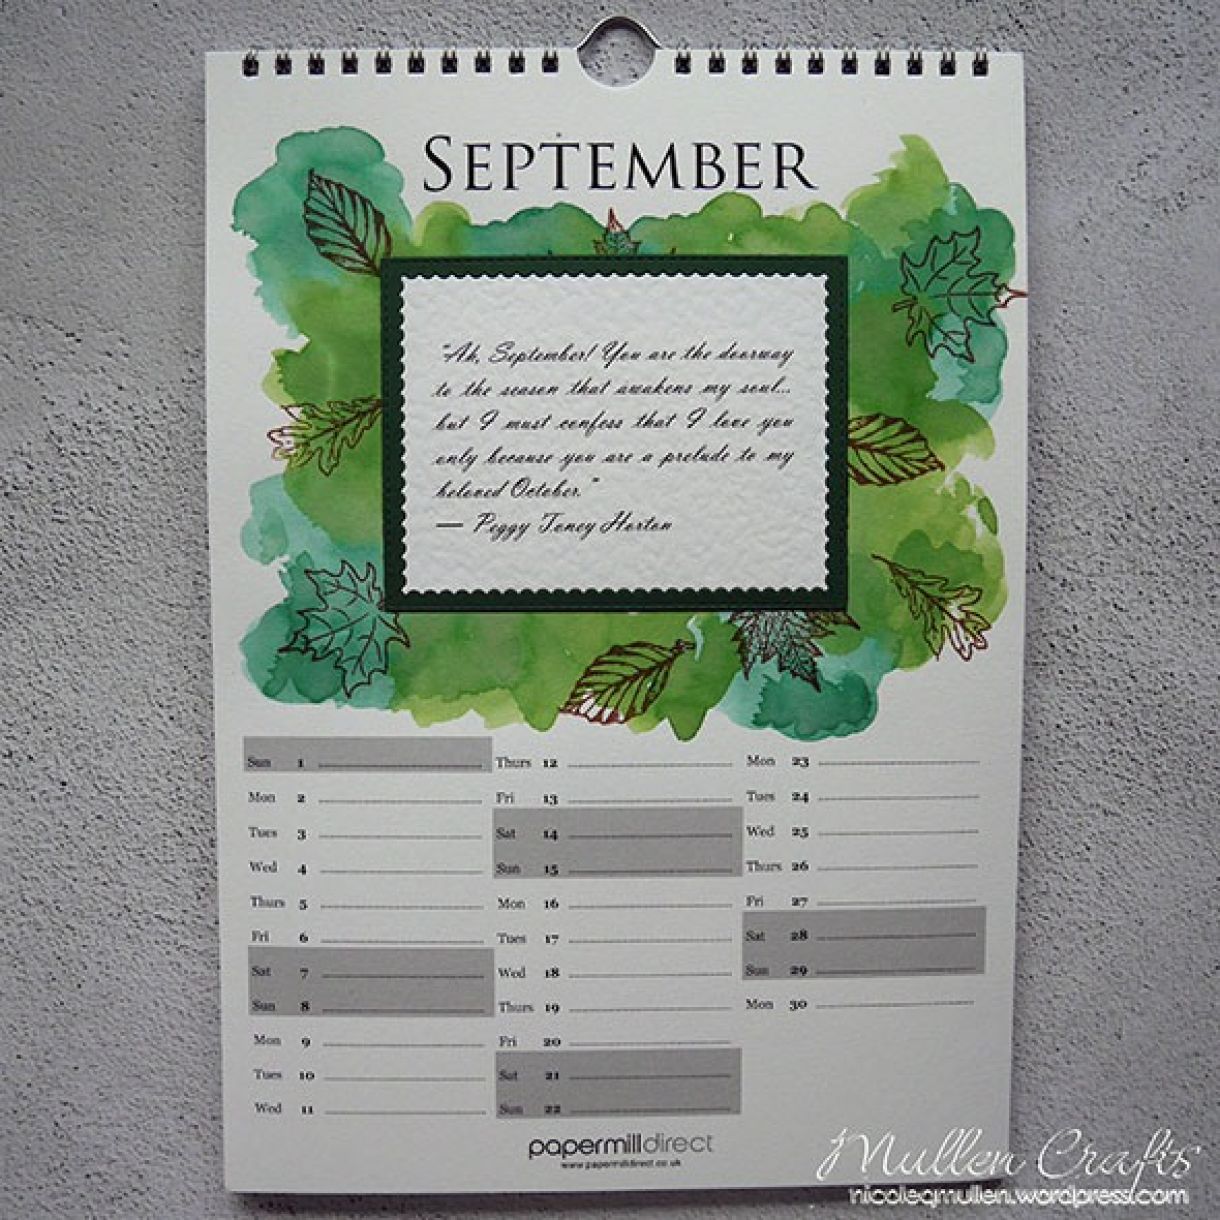 Nicole Calendar Page September 1